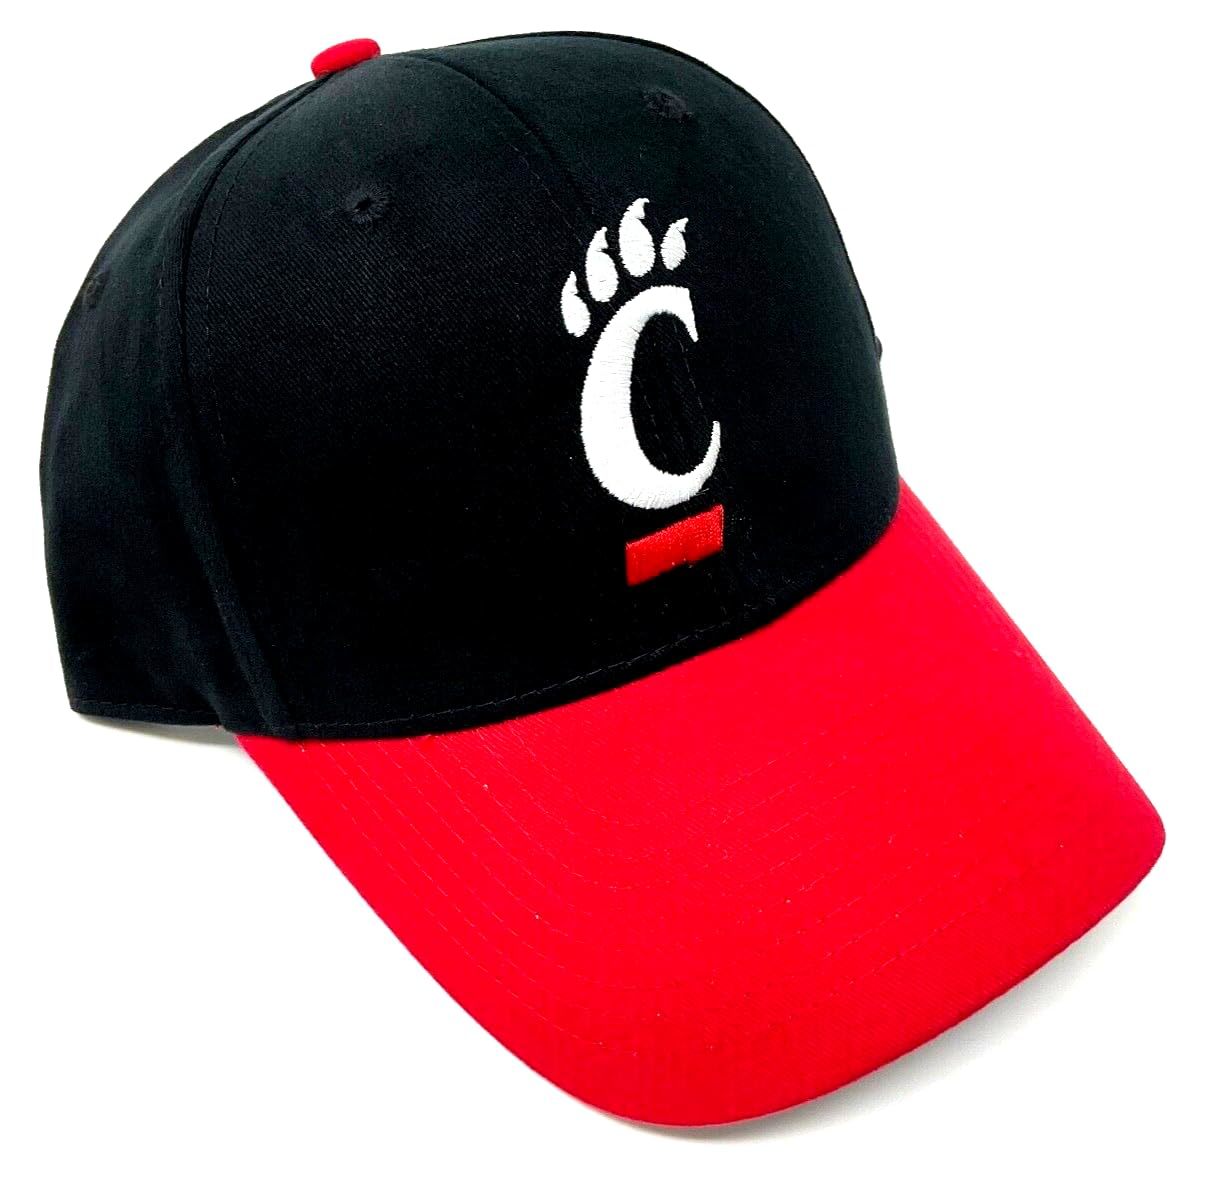 Primary image for National Cap MVP Cincinnati Bearcats Logo Black & Red Curved Bill Adjustable Hat